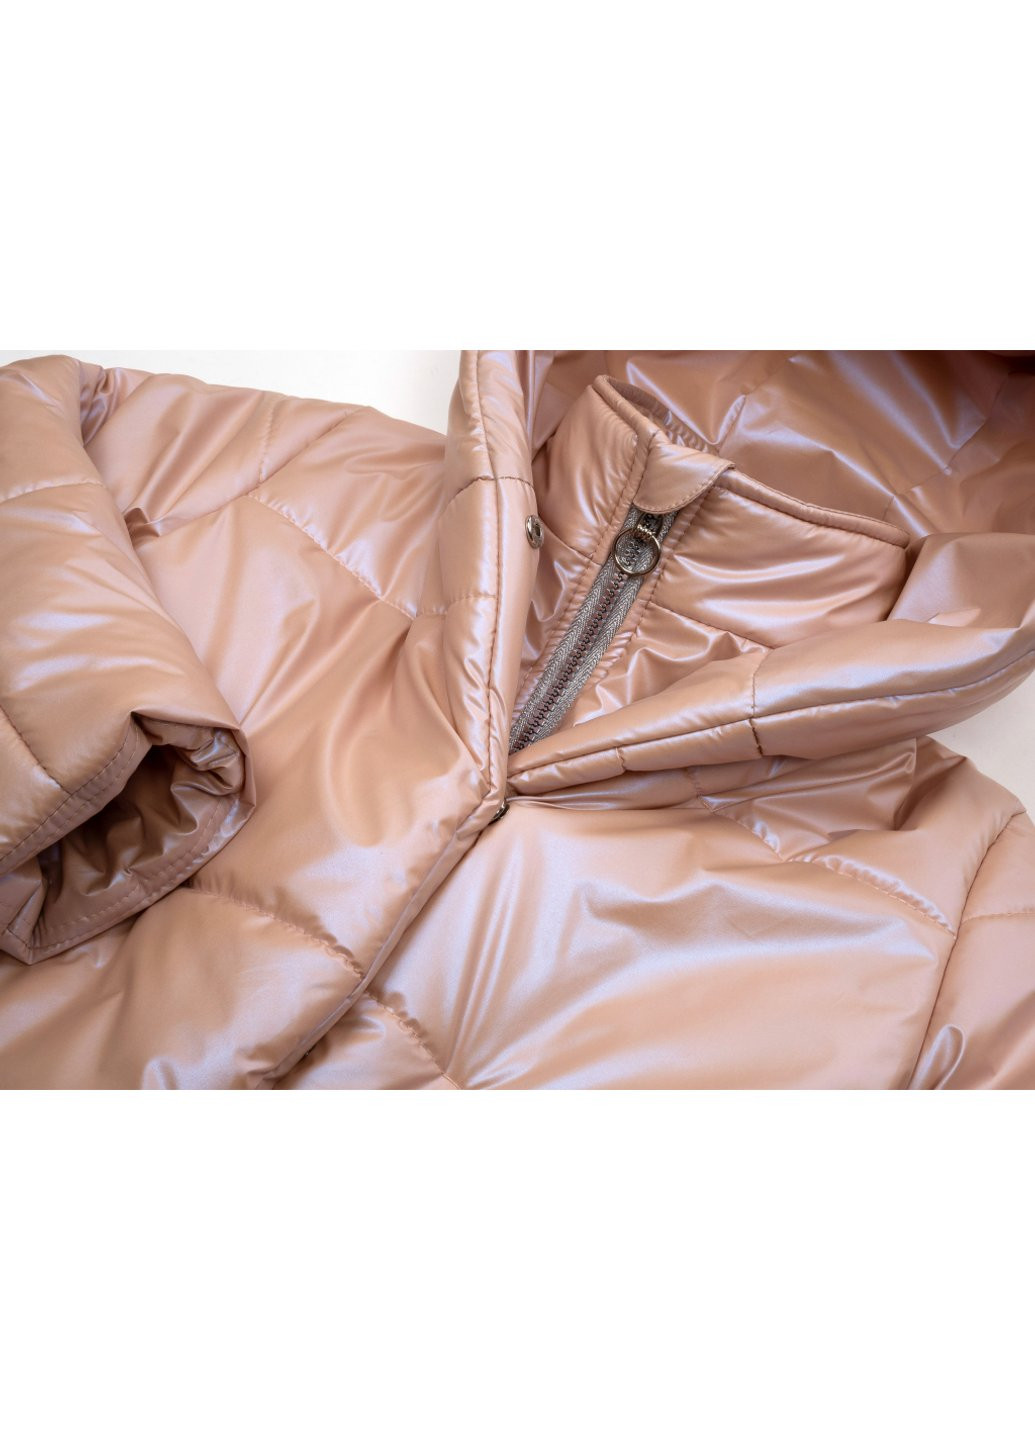 Рожева демісезонна куртка пальто "rozi" (21706-122g-pink) Brilliant